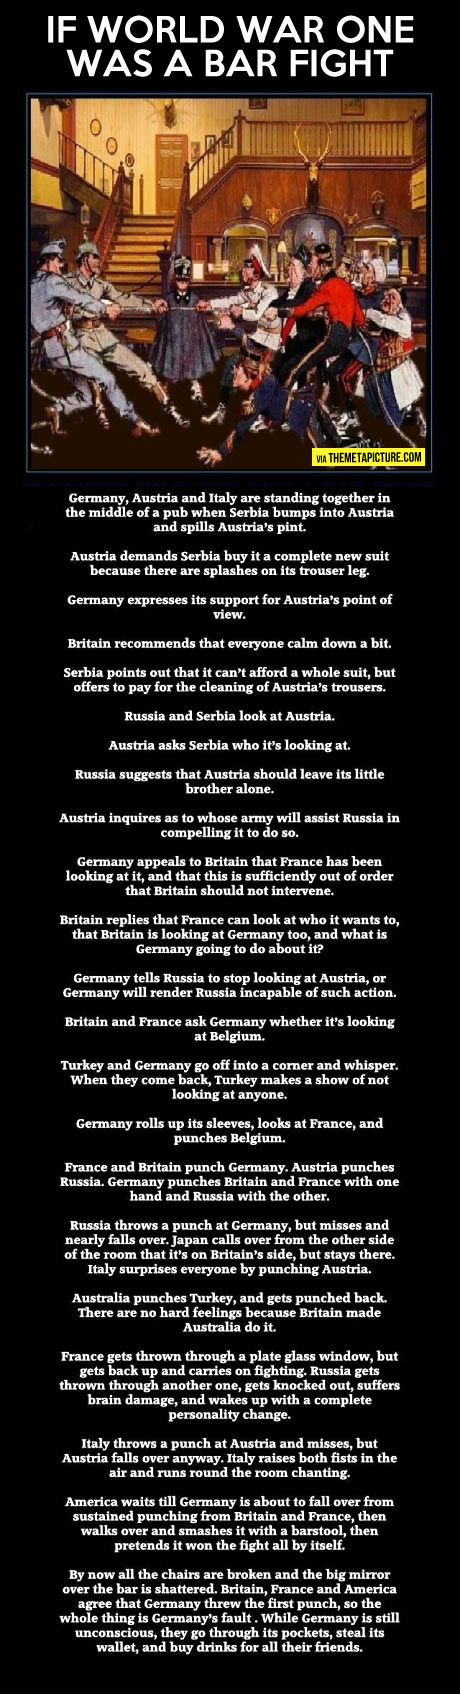 If World War One was a bar fight…